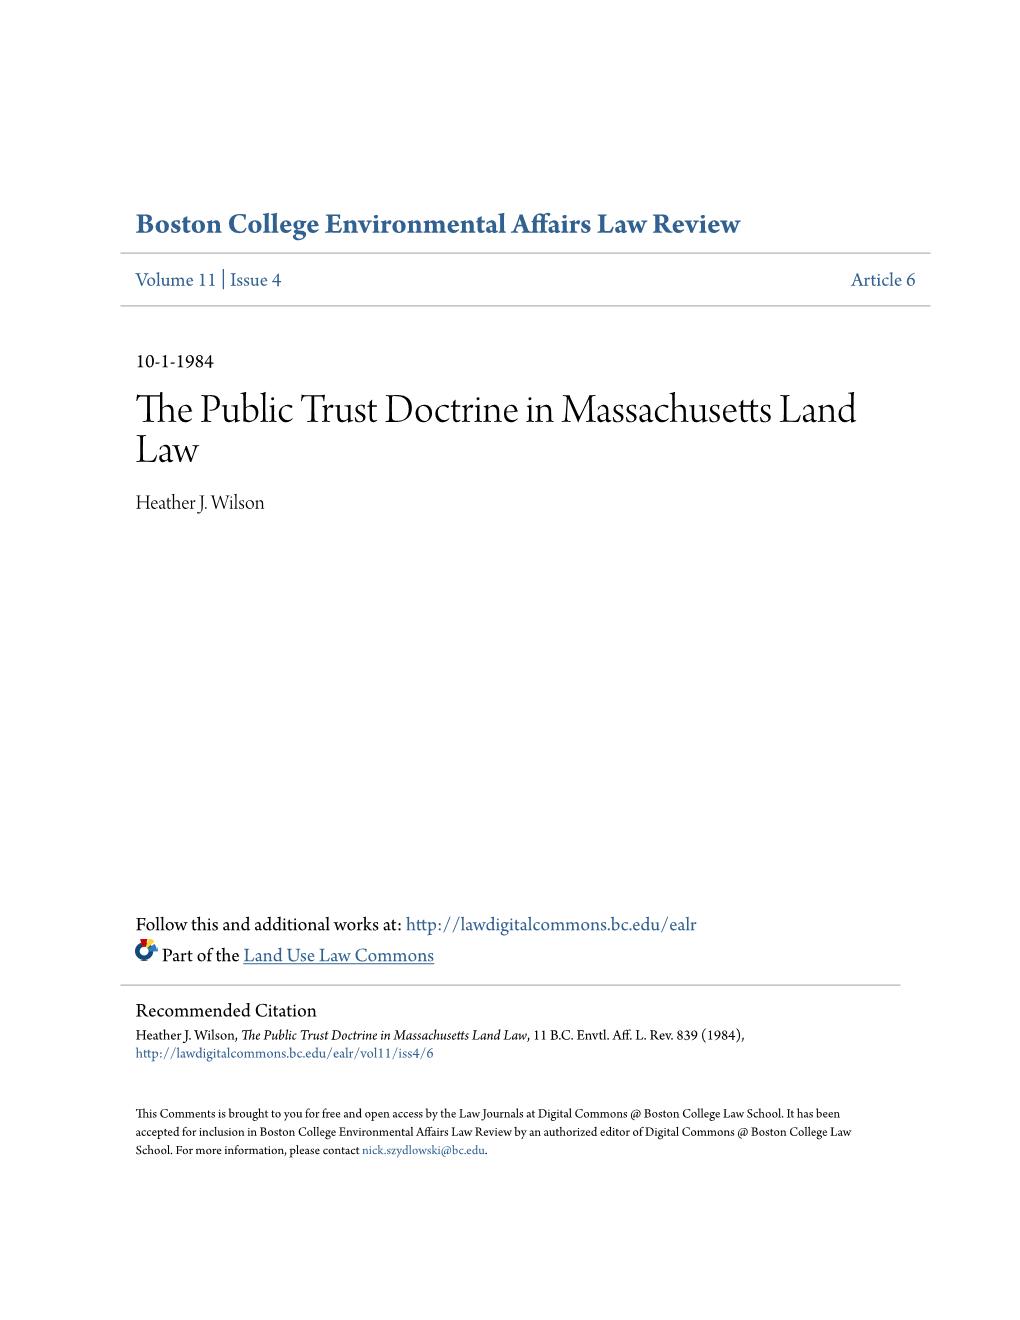 The Public Trust Doctrine in Massachusetts Land Law